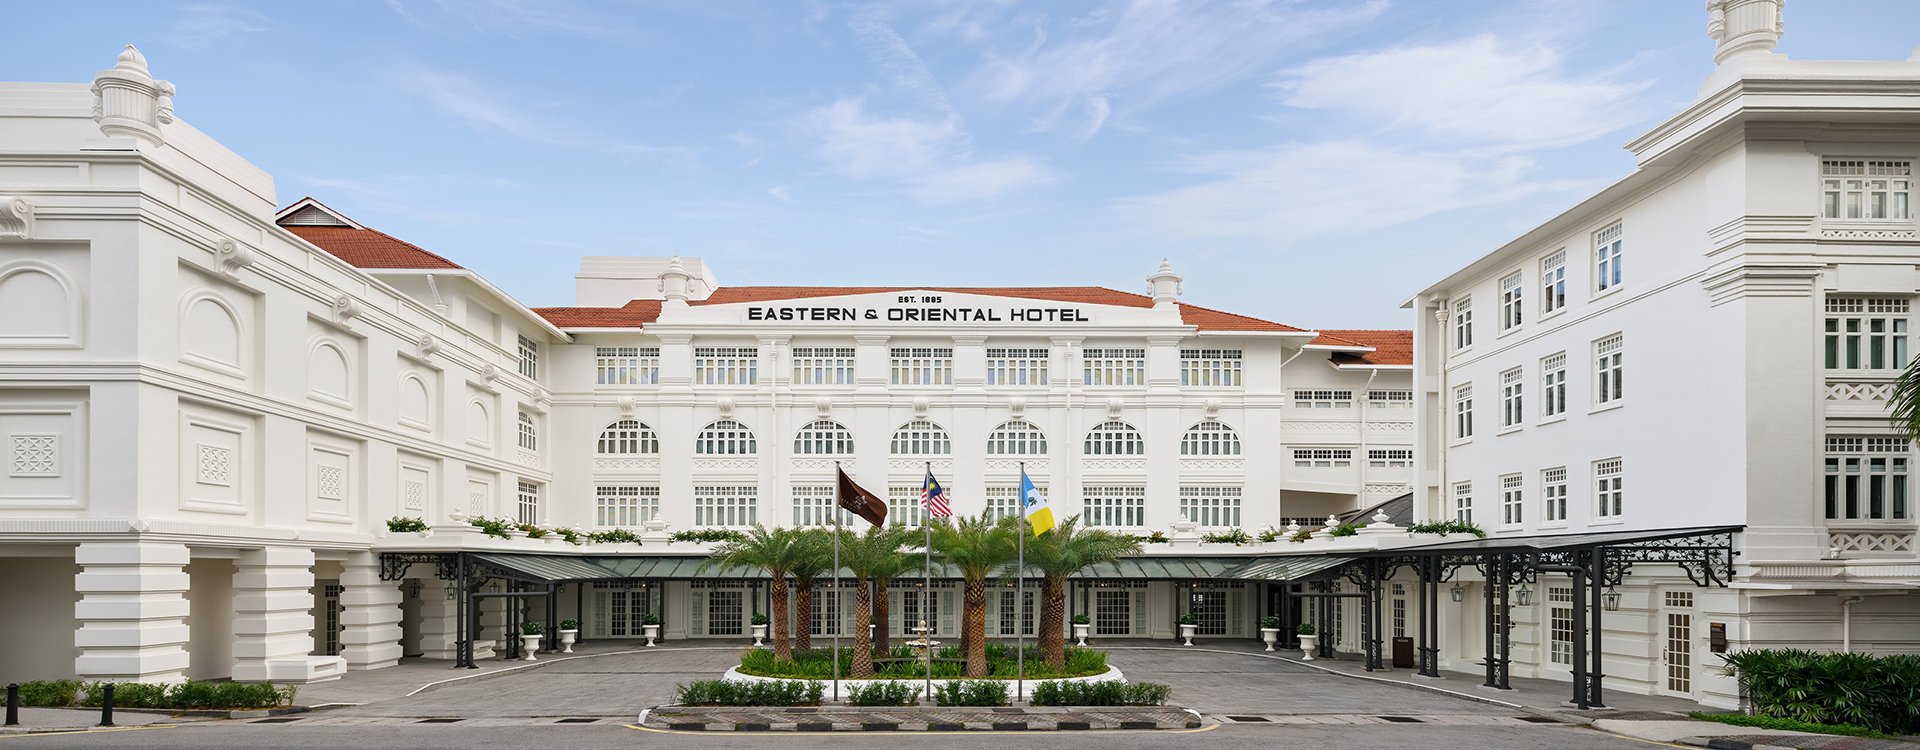 Eastern-&-Oriental-Hotel_Exterior-WhiTe-Building